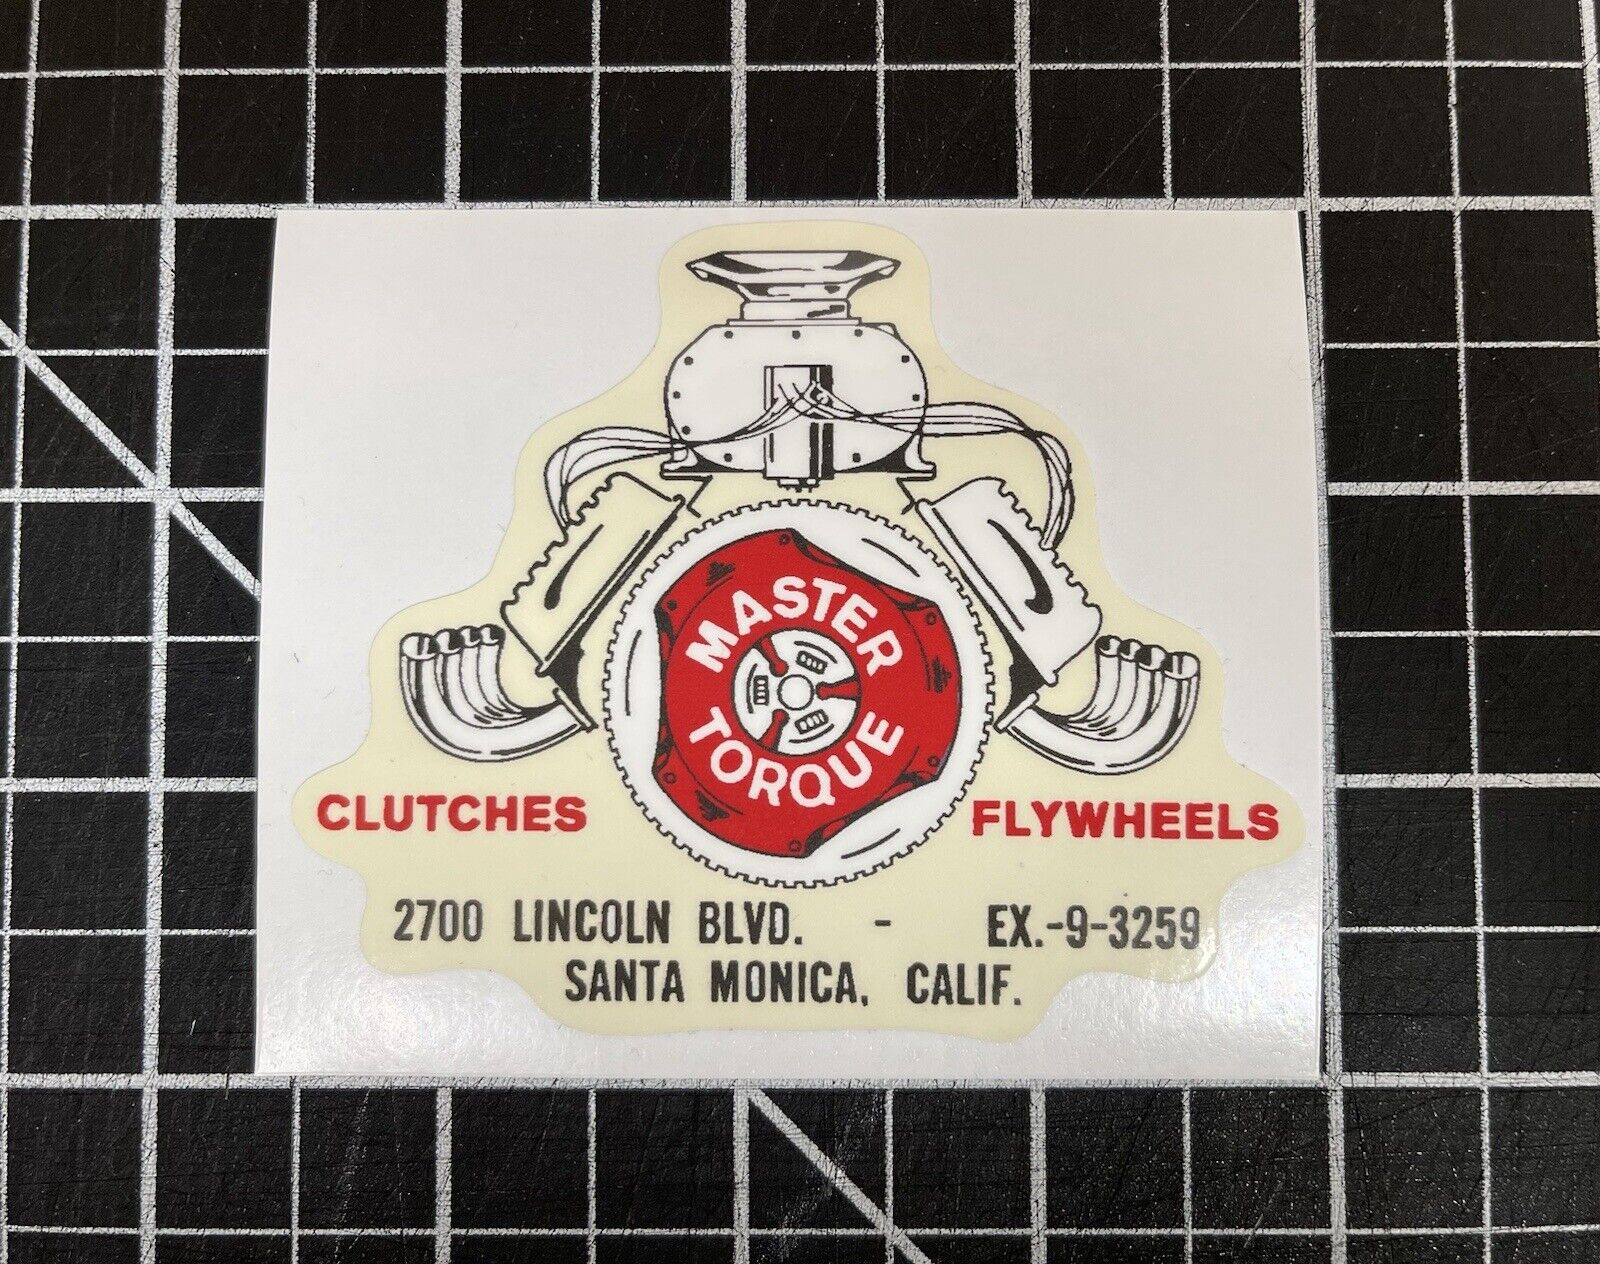 MASTER TORQUE Clutches Flywheels. NEW Vintage 60\'s Racing Sticker Decal